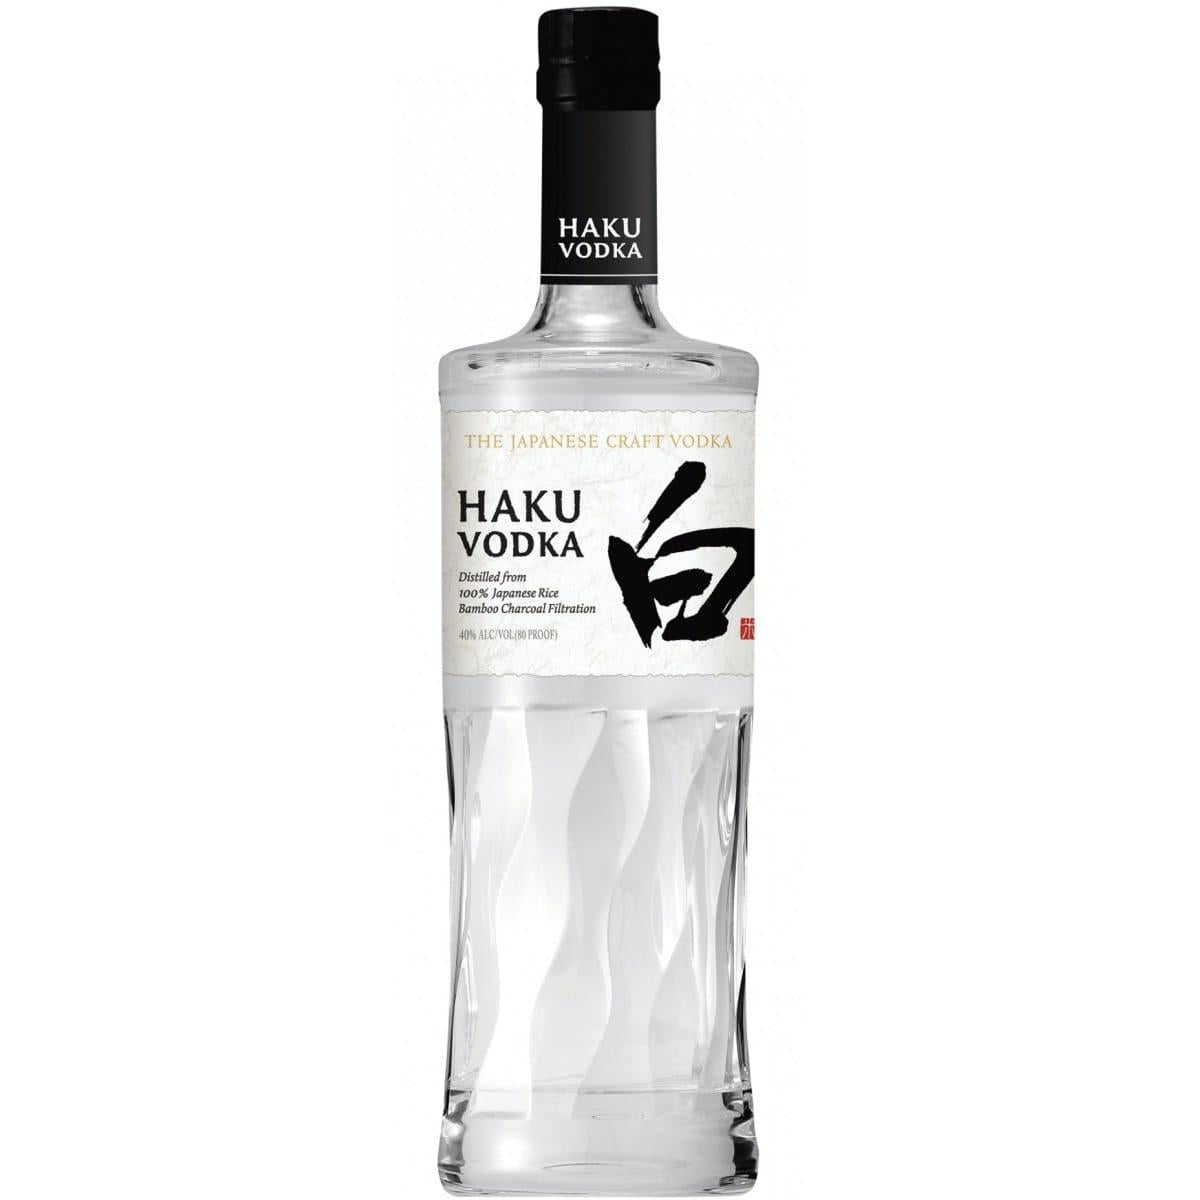 Haku vodka 750ml